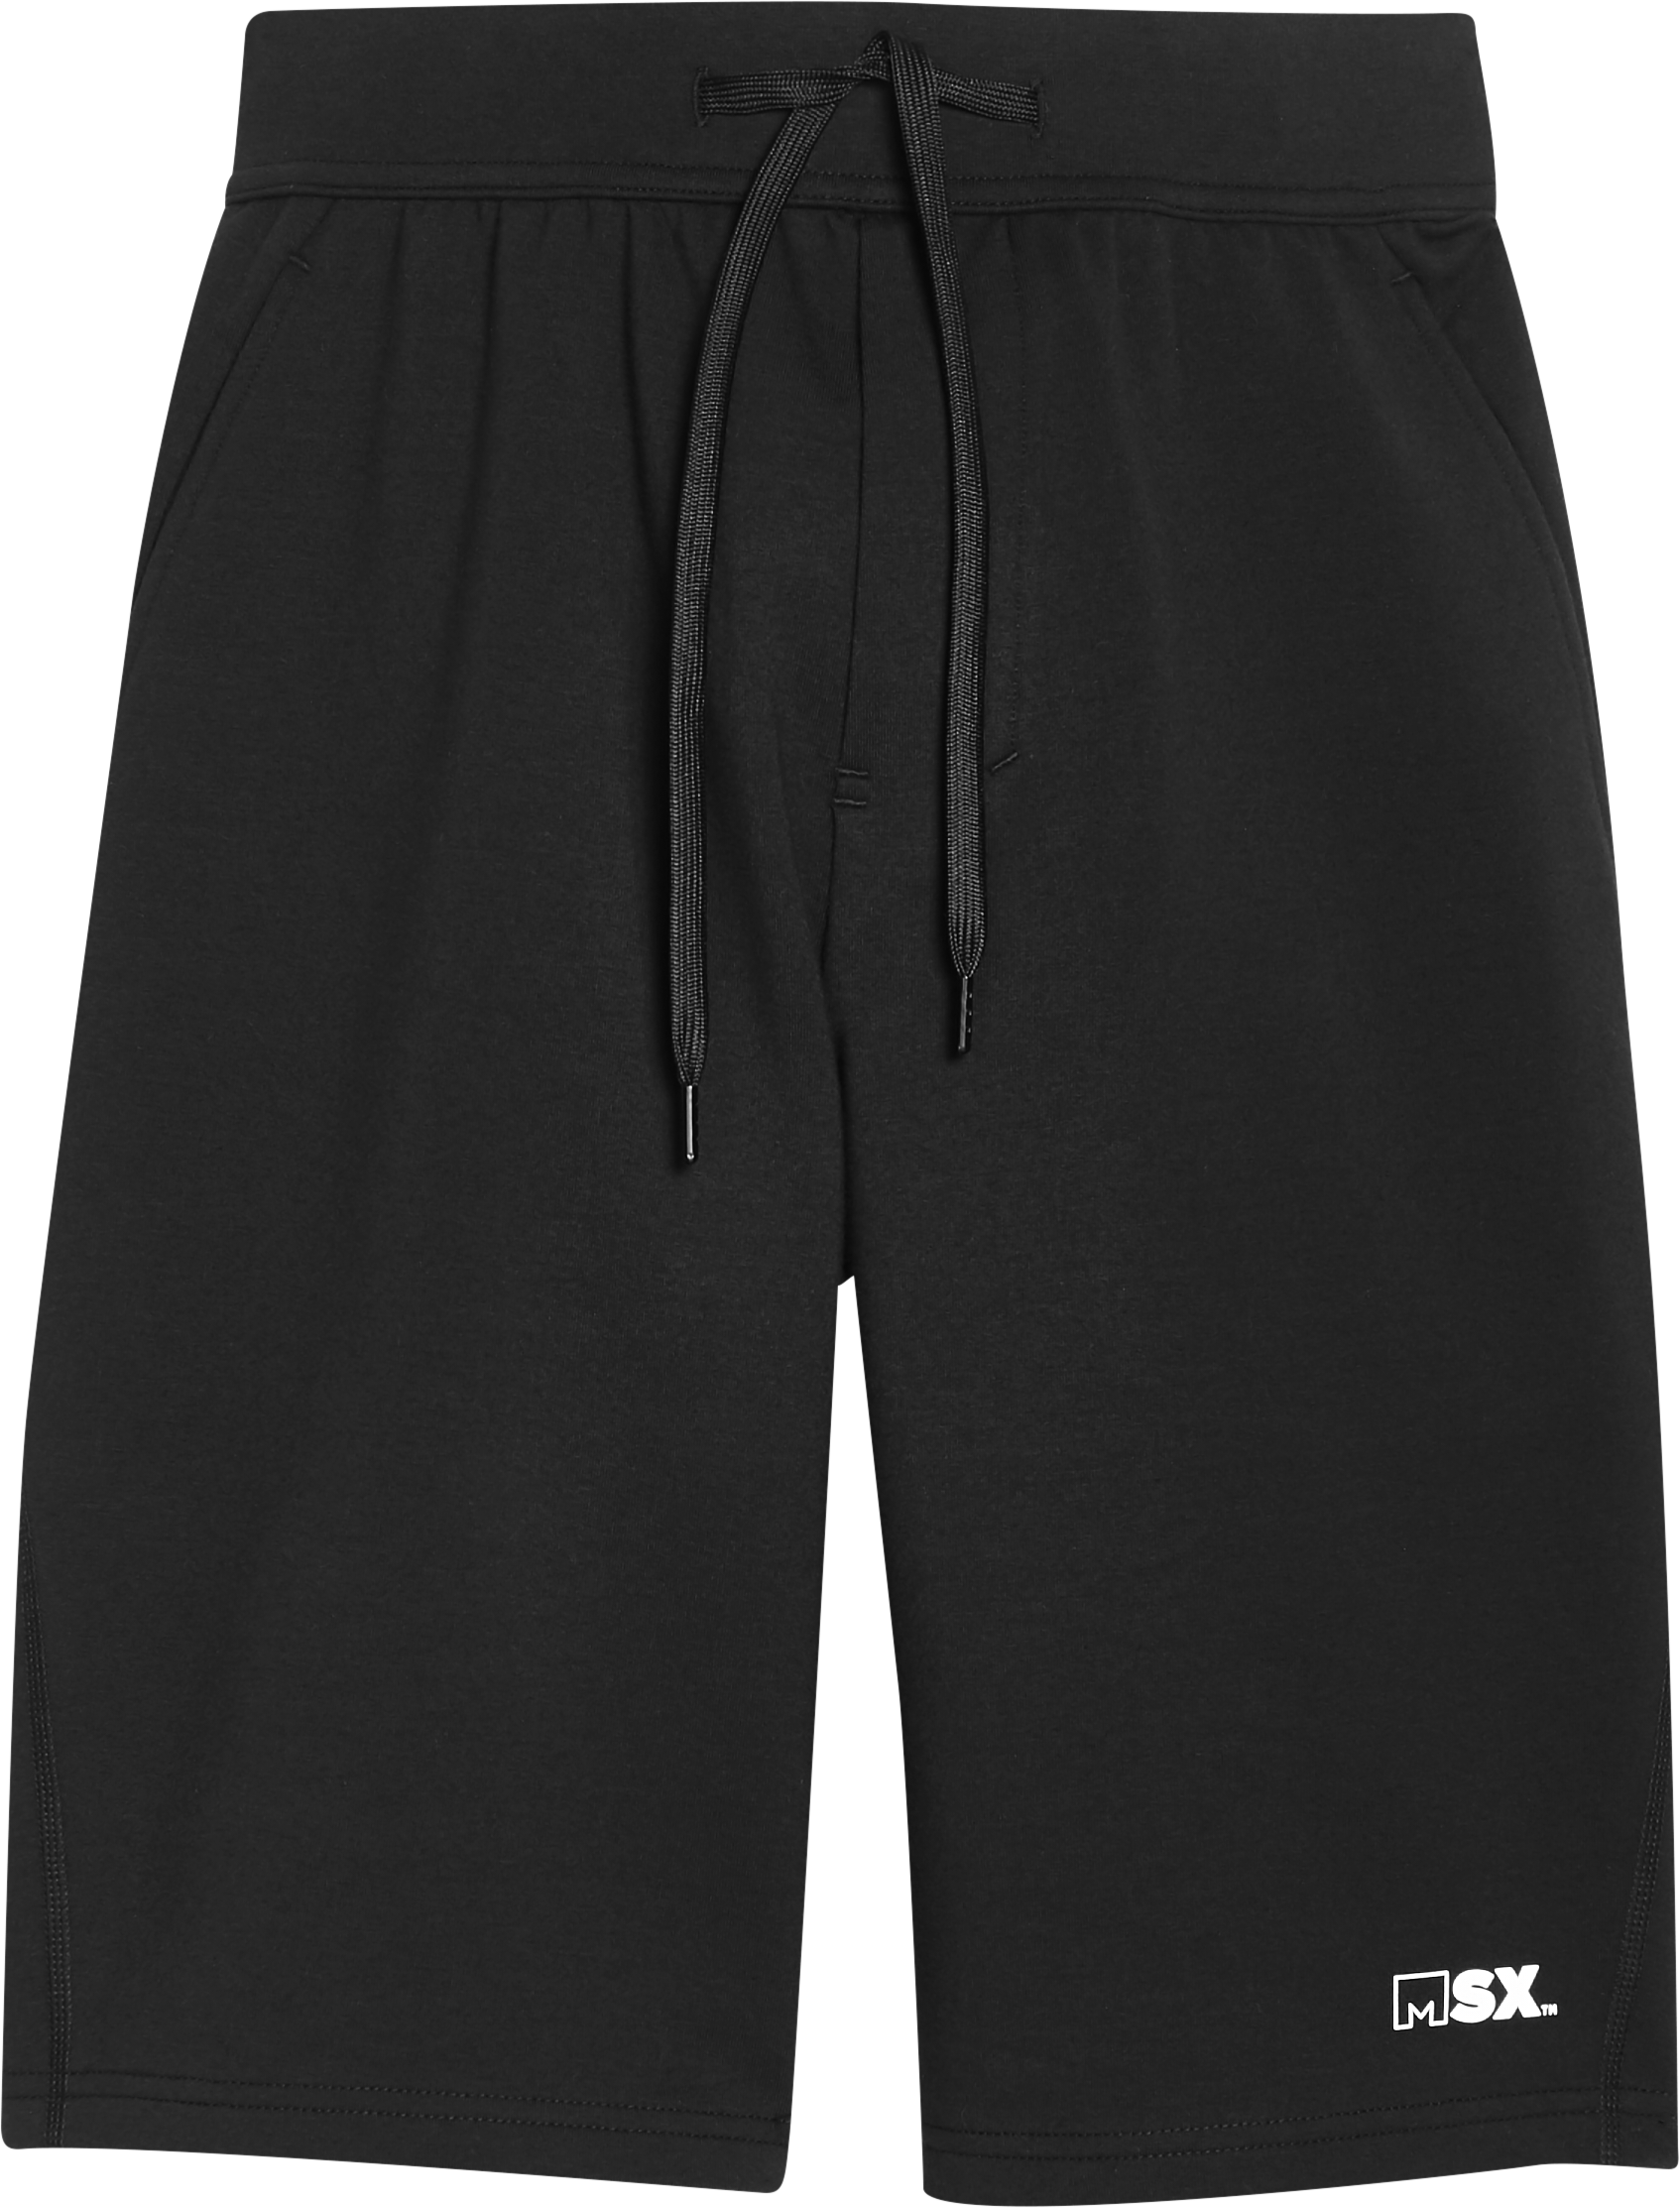 Msx By Michael Strahan Modern Fit Fleece Knit Shorts Black Mens Active Wear Mens Wearhouse 